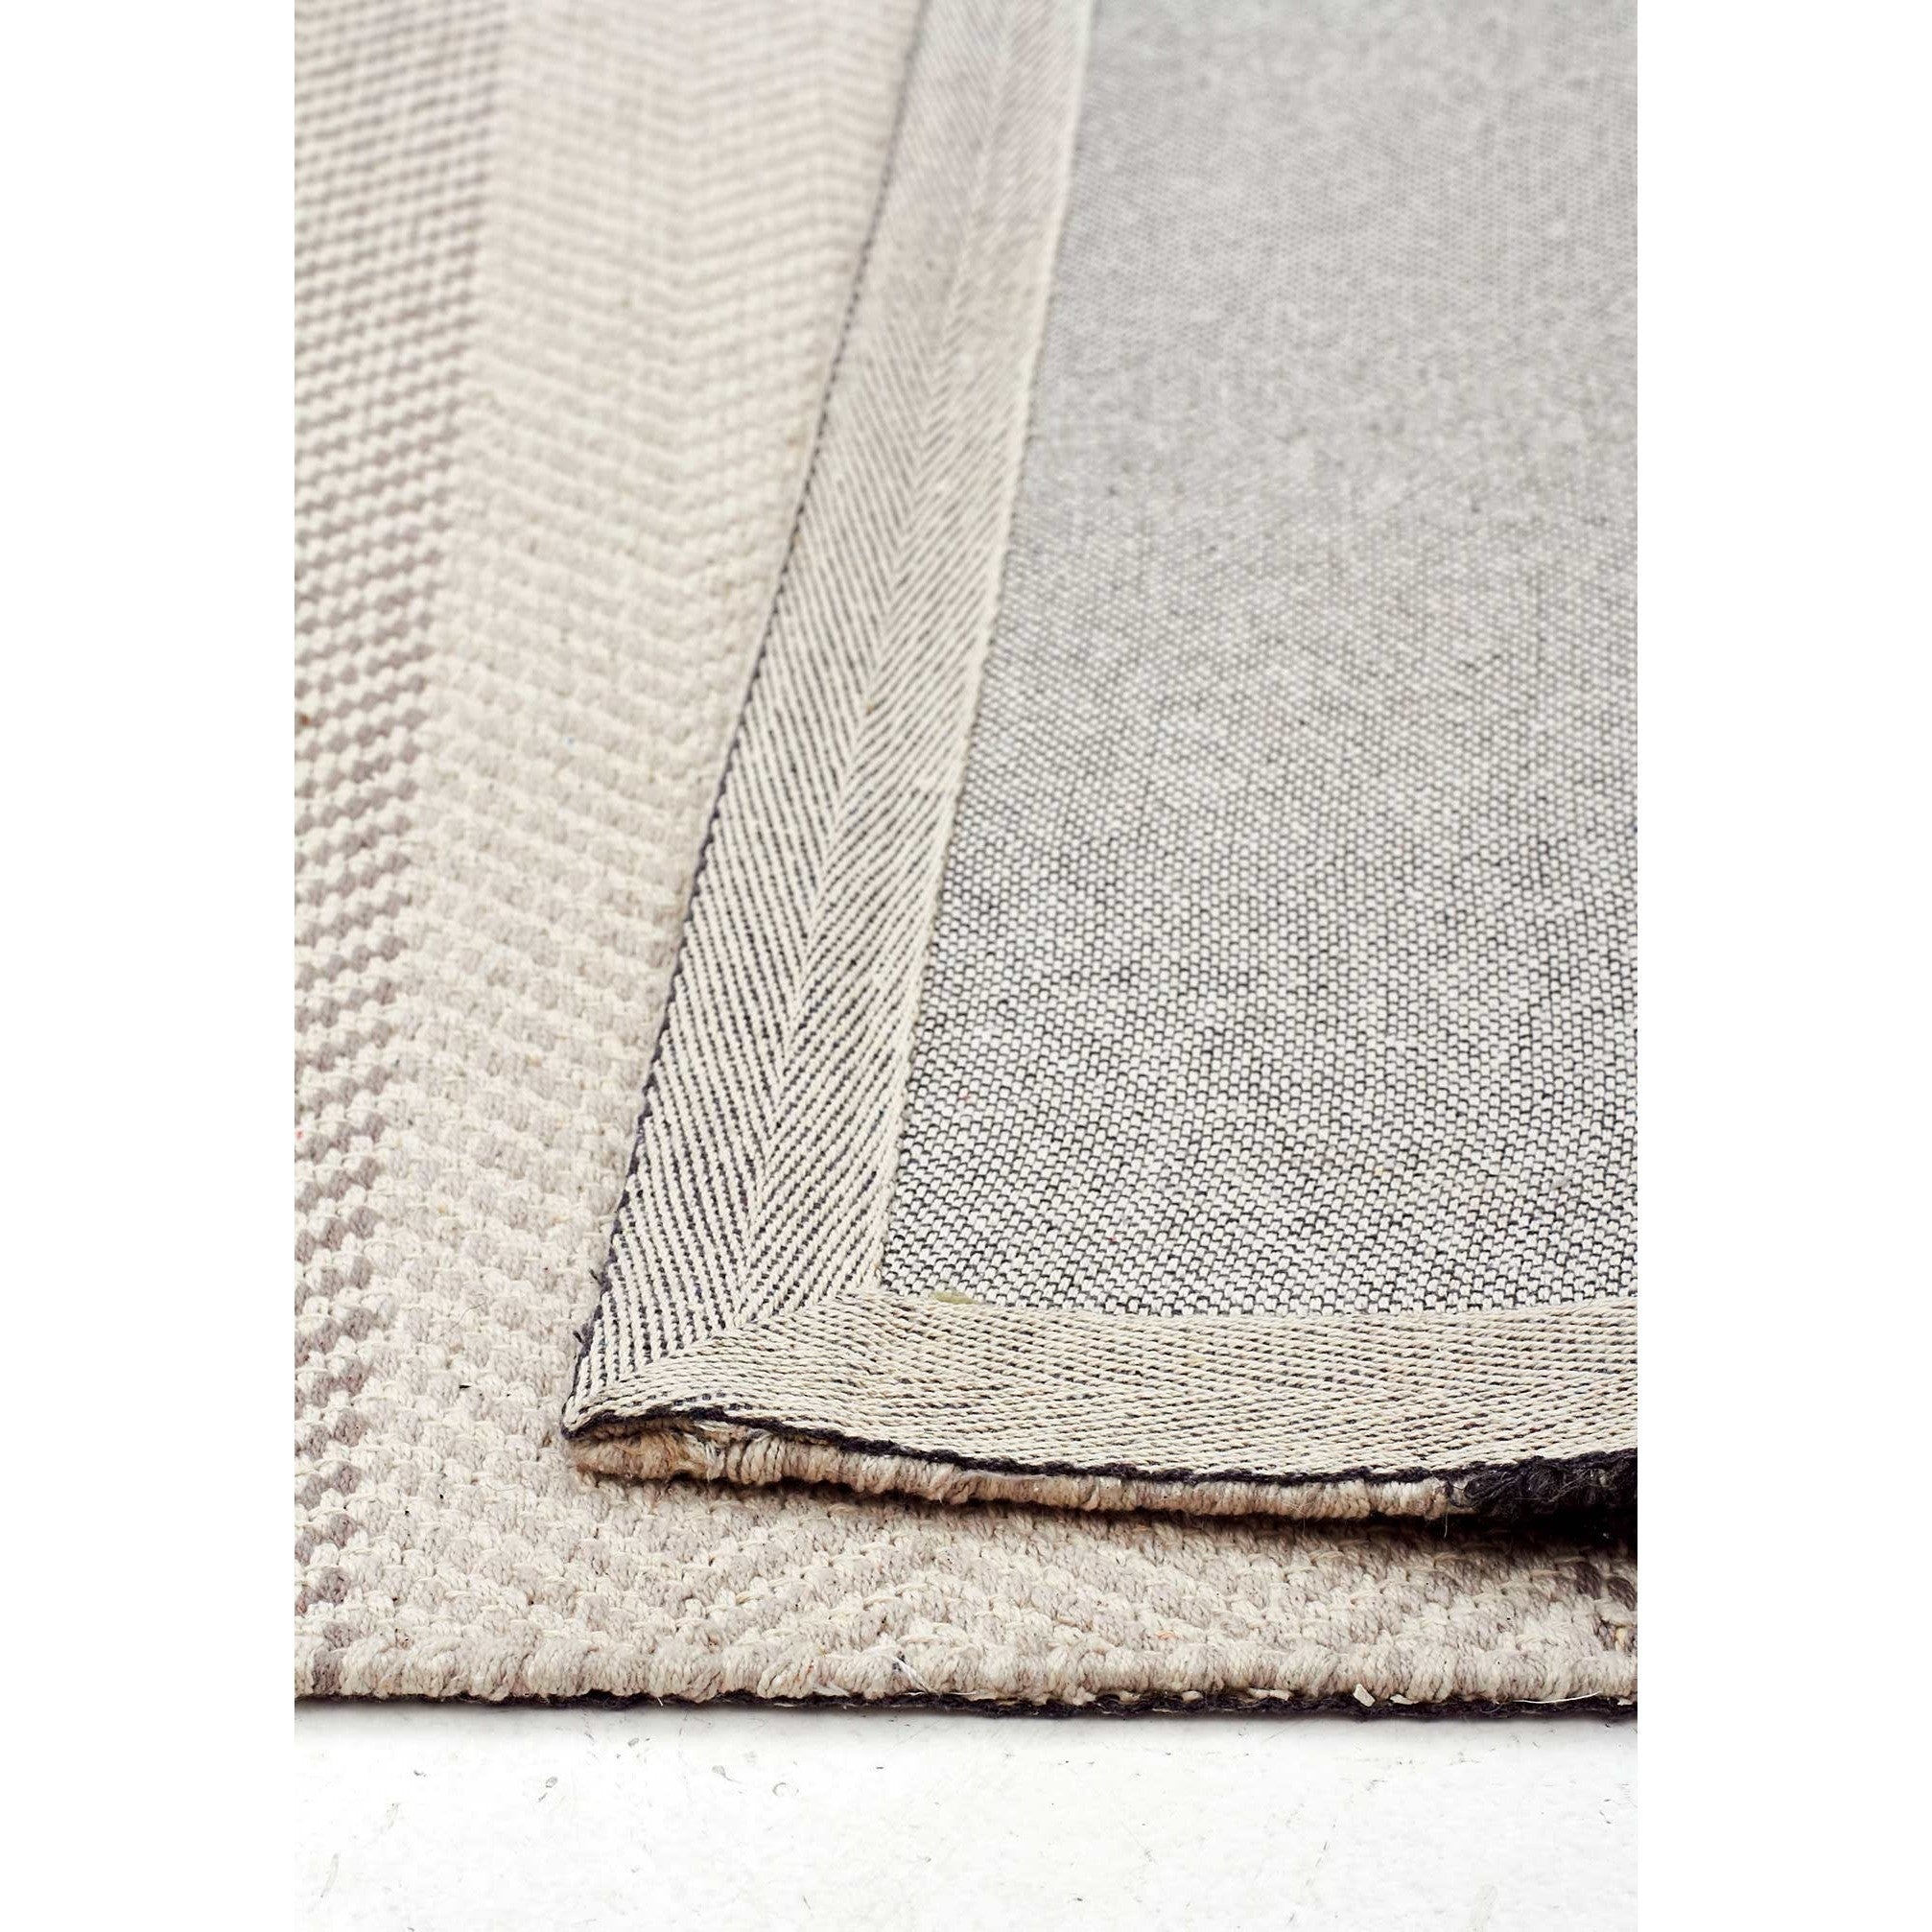 Urban Charcoal Stripe Cotton Wool Blend Rug - Razzino Furniture